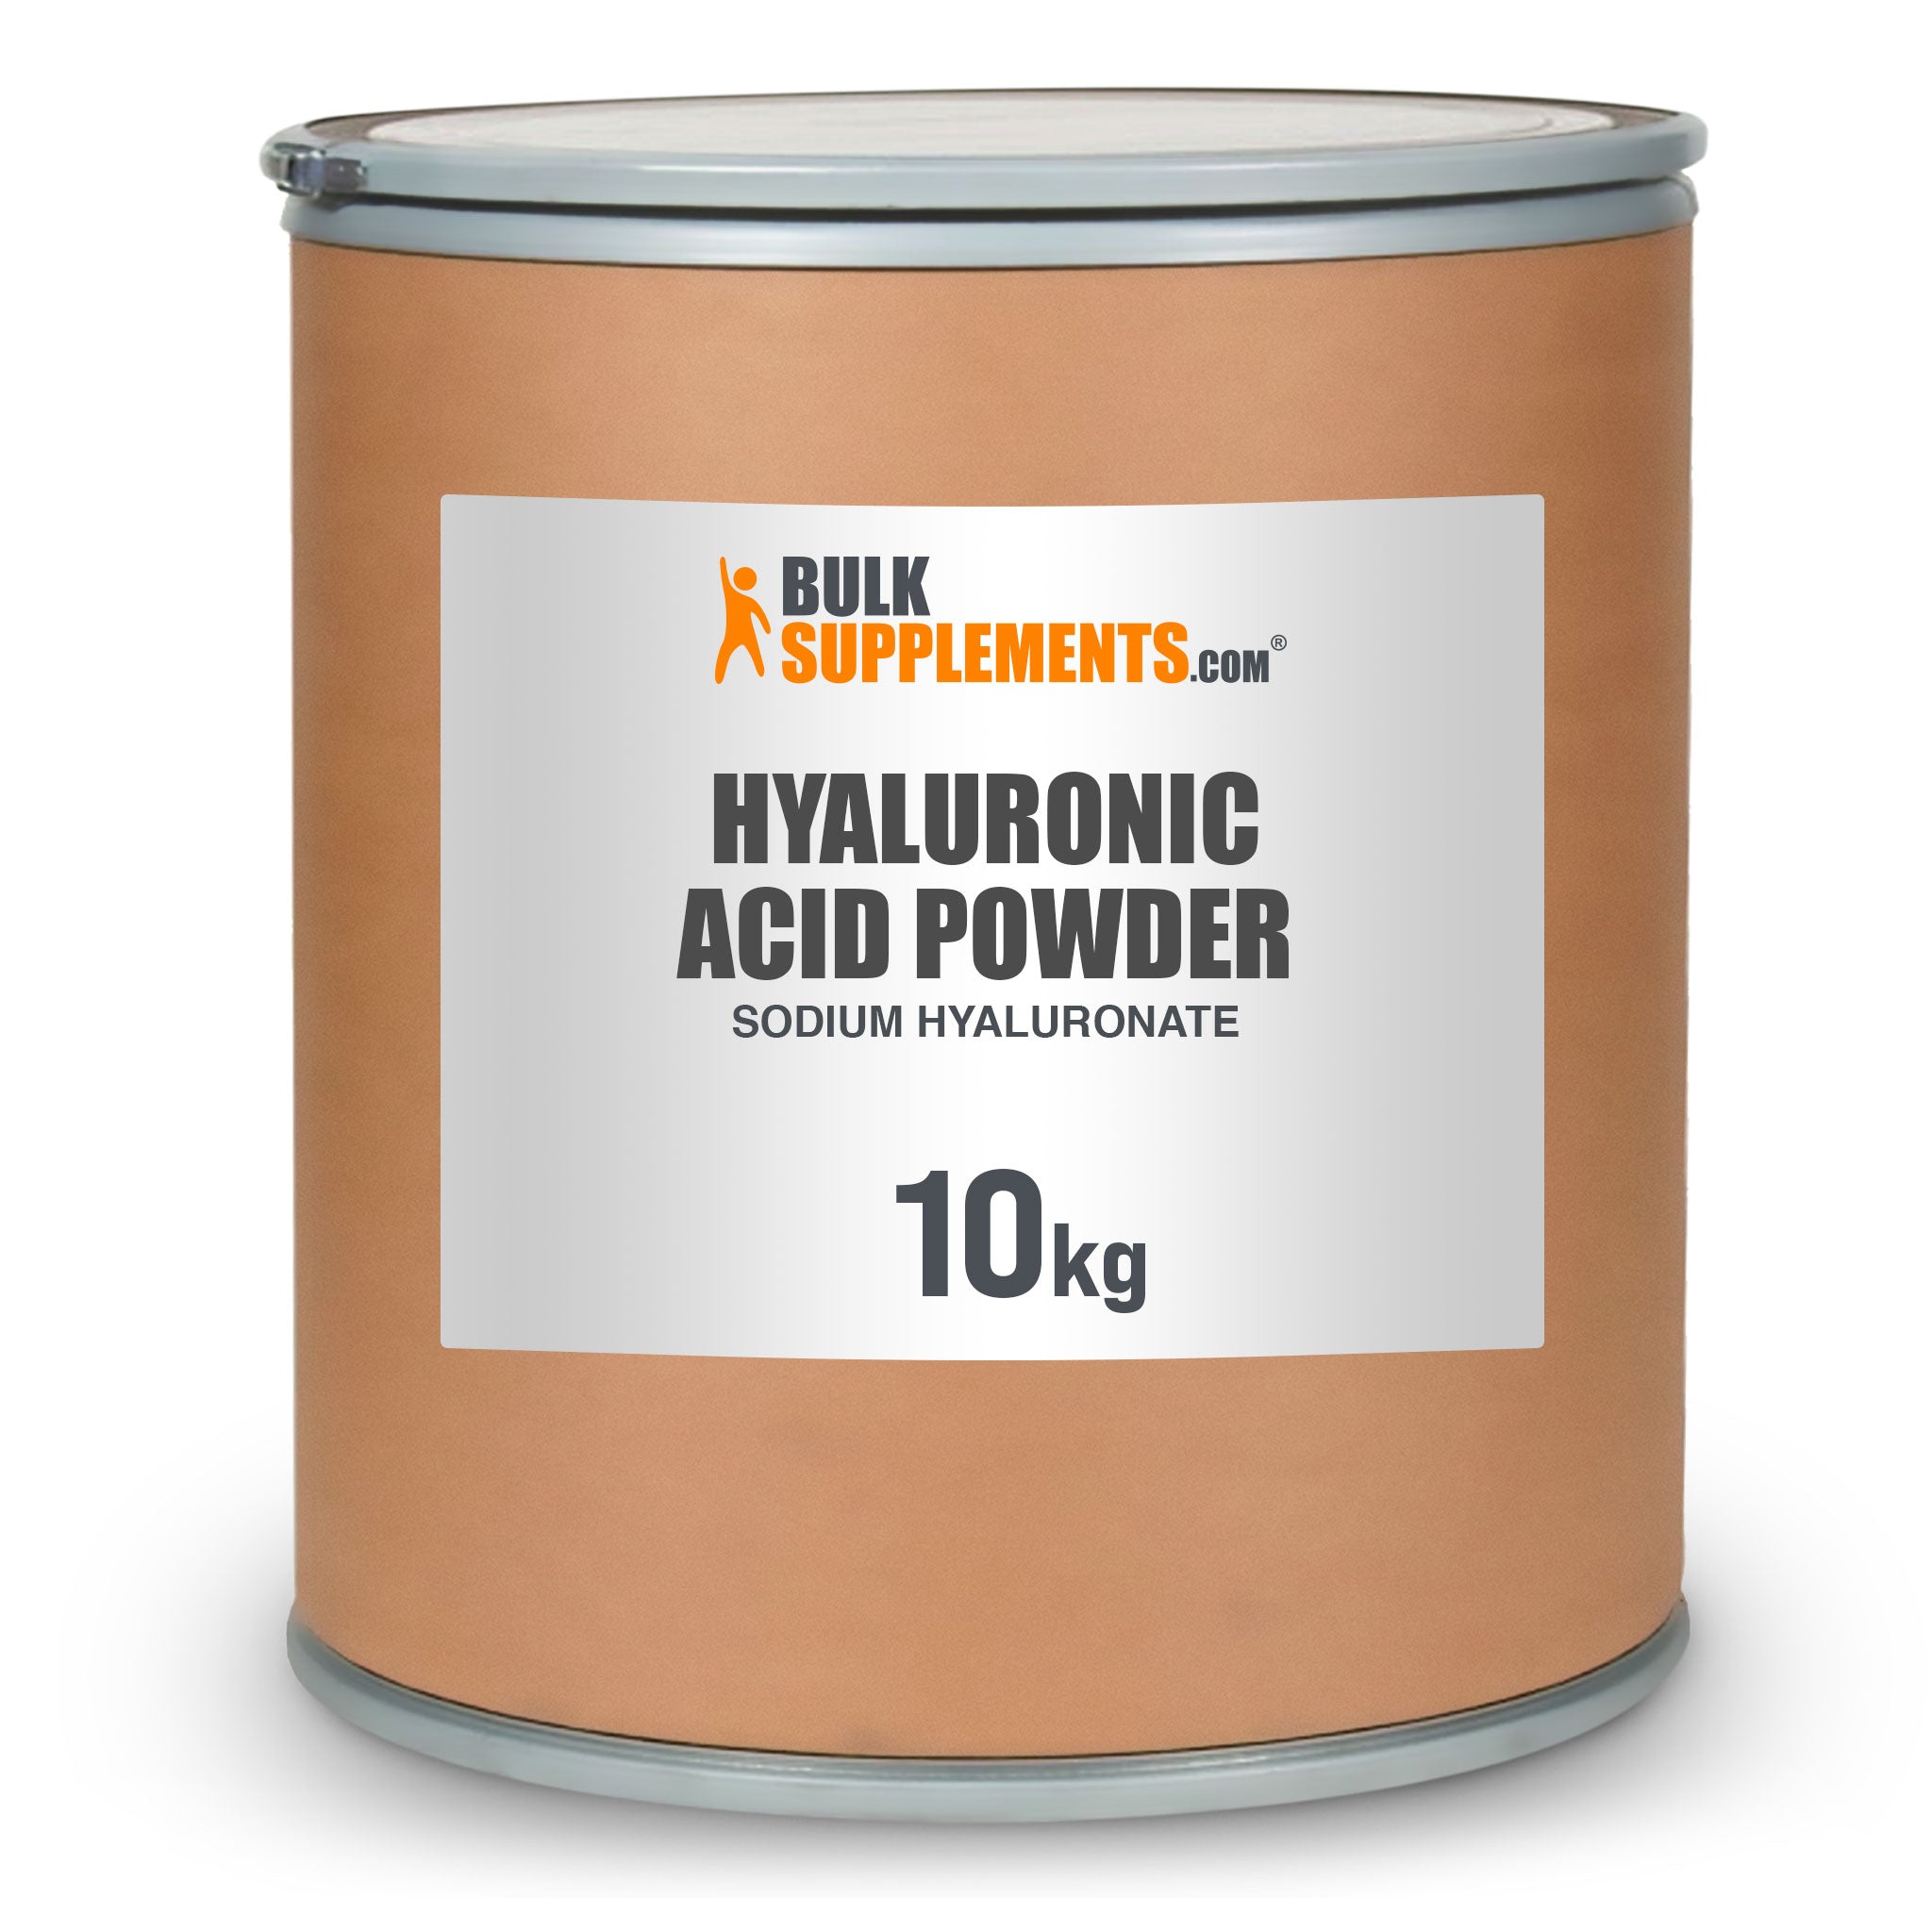 BulkSupplements Hyaluronic Acid Powder Sodium Hyaluronate 10kg drum